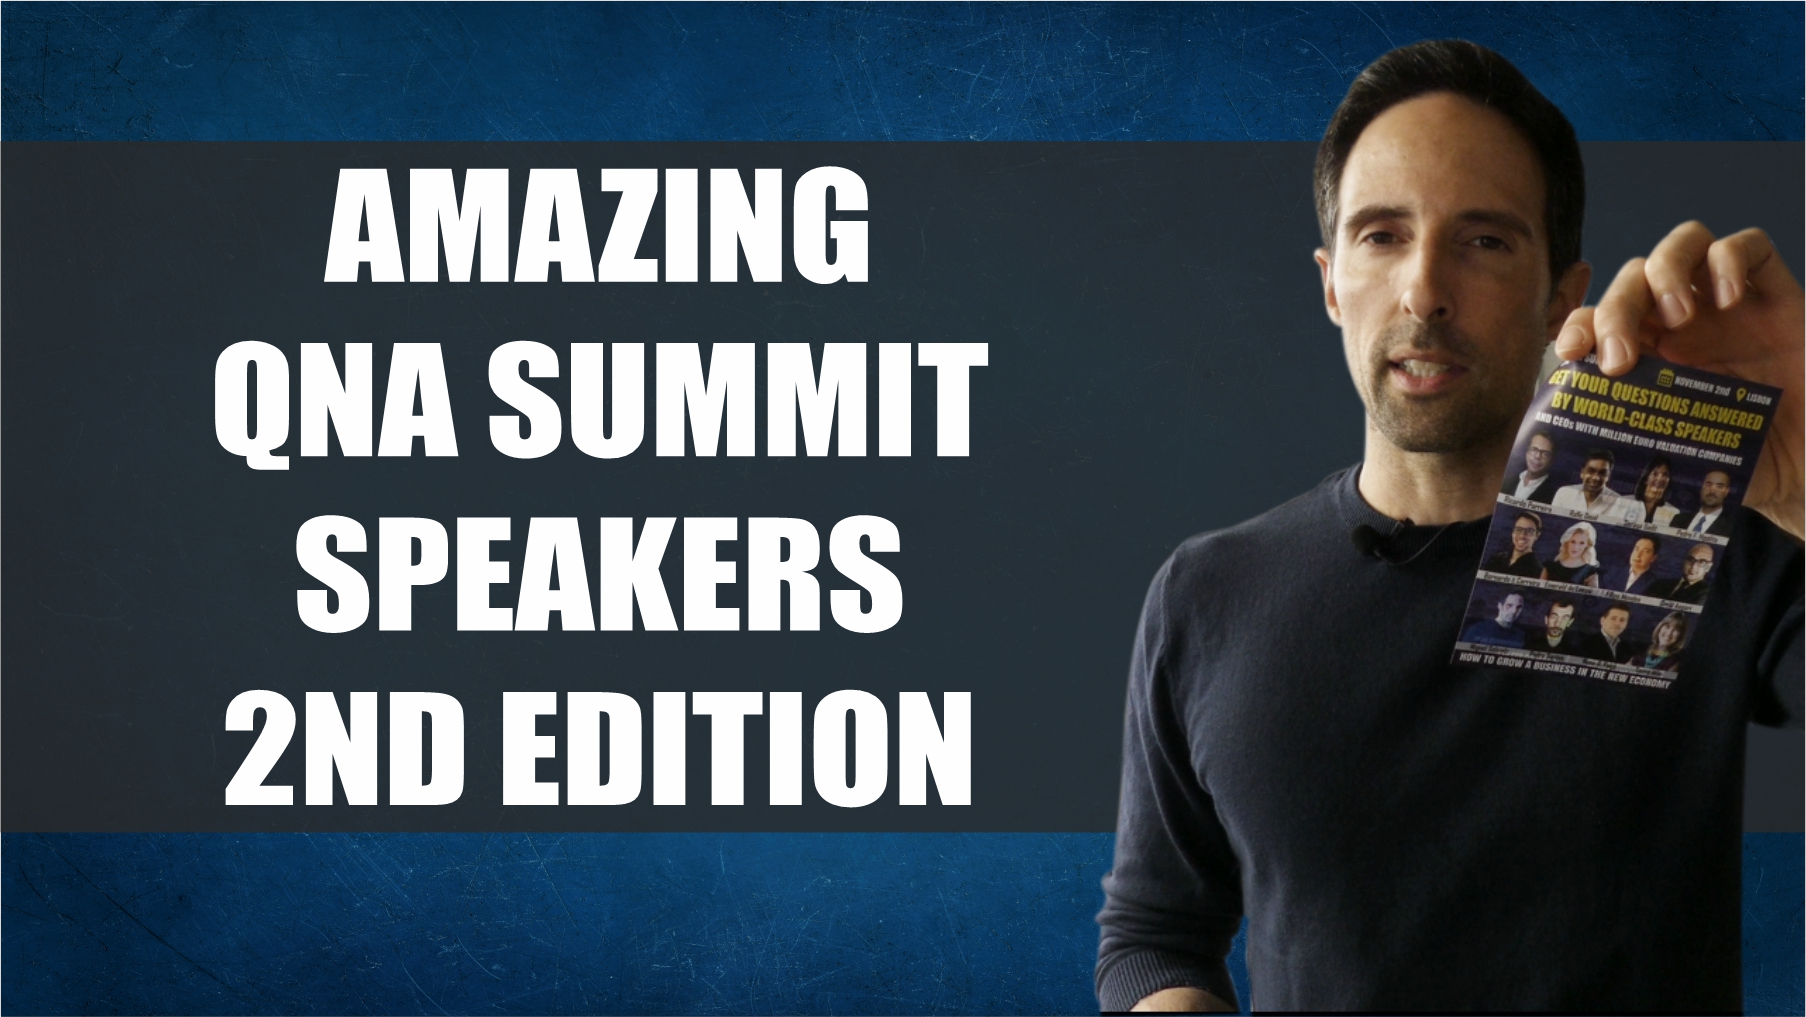 Amazing Speakers at QnA Summit - Marketing, Data Privacy, Internationalization